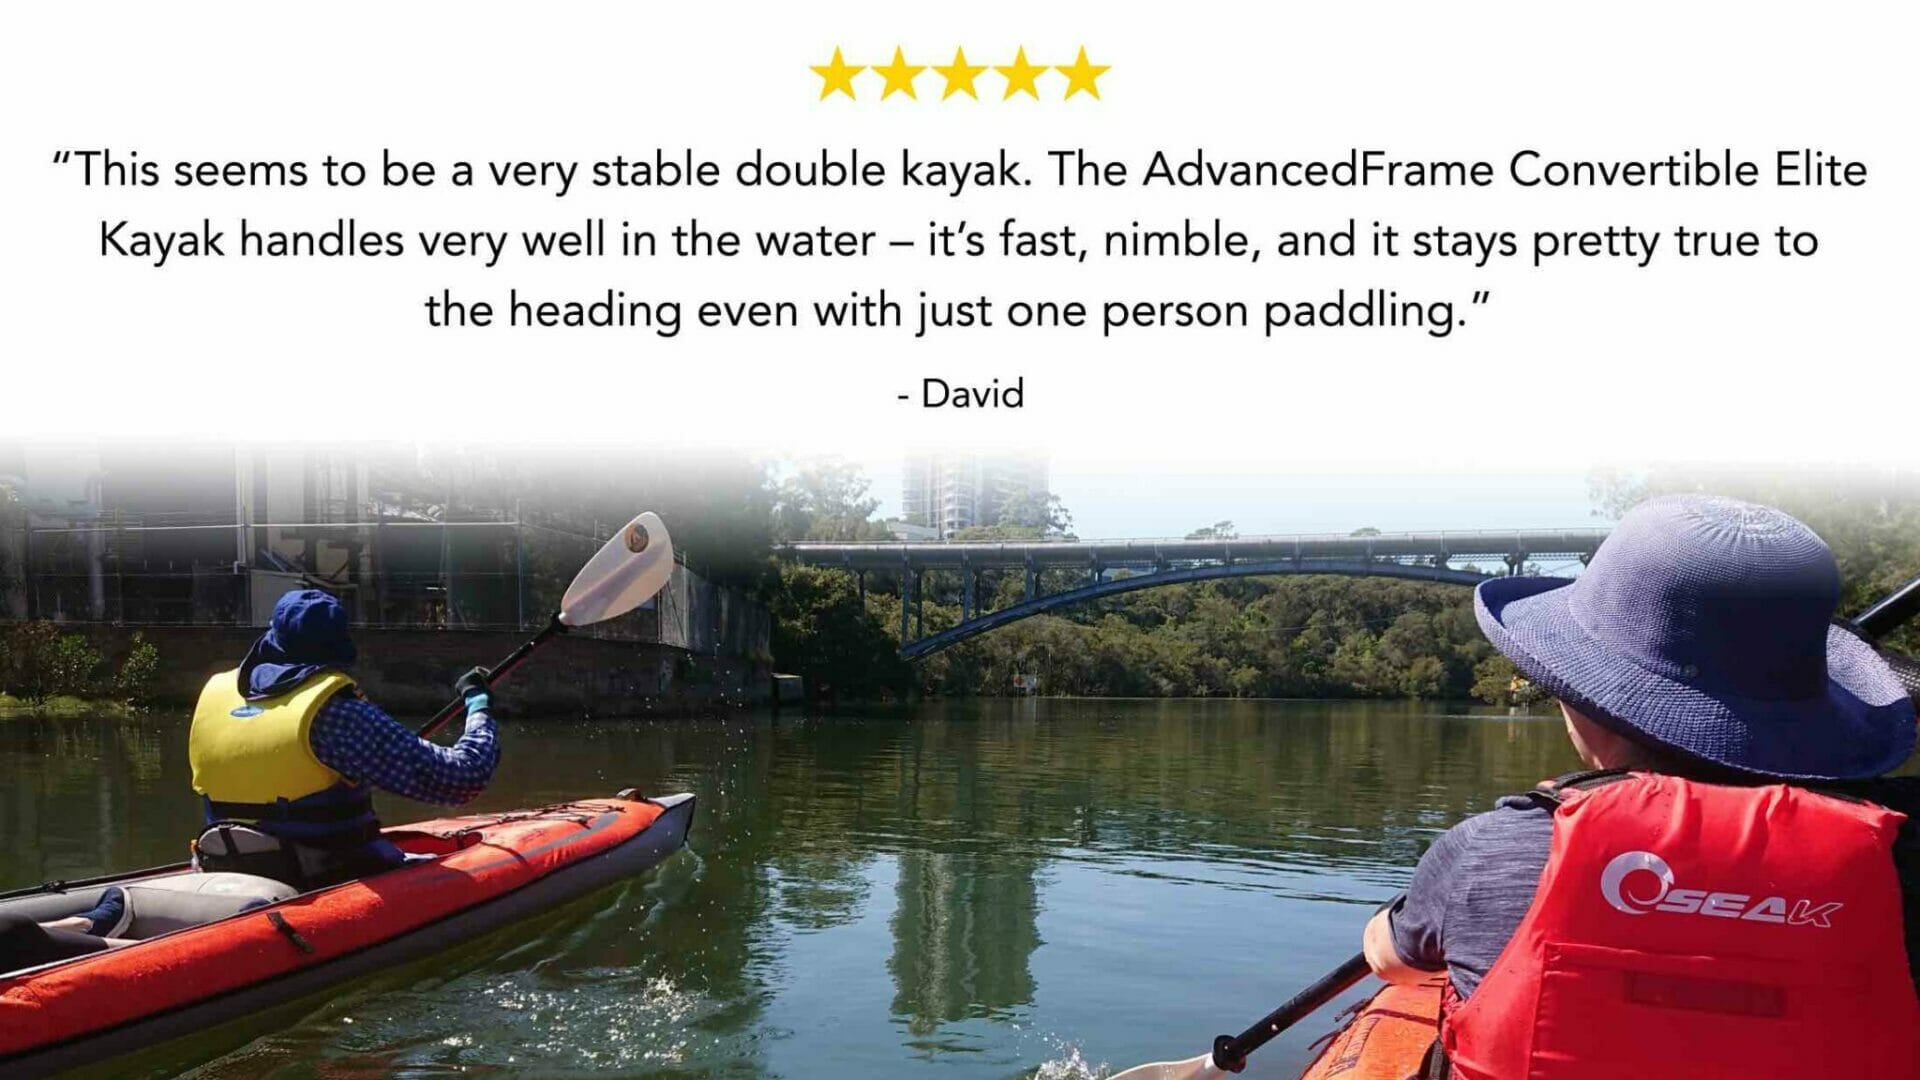 advancedframe convertible elite kayak david testimonial